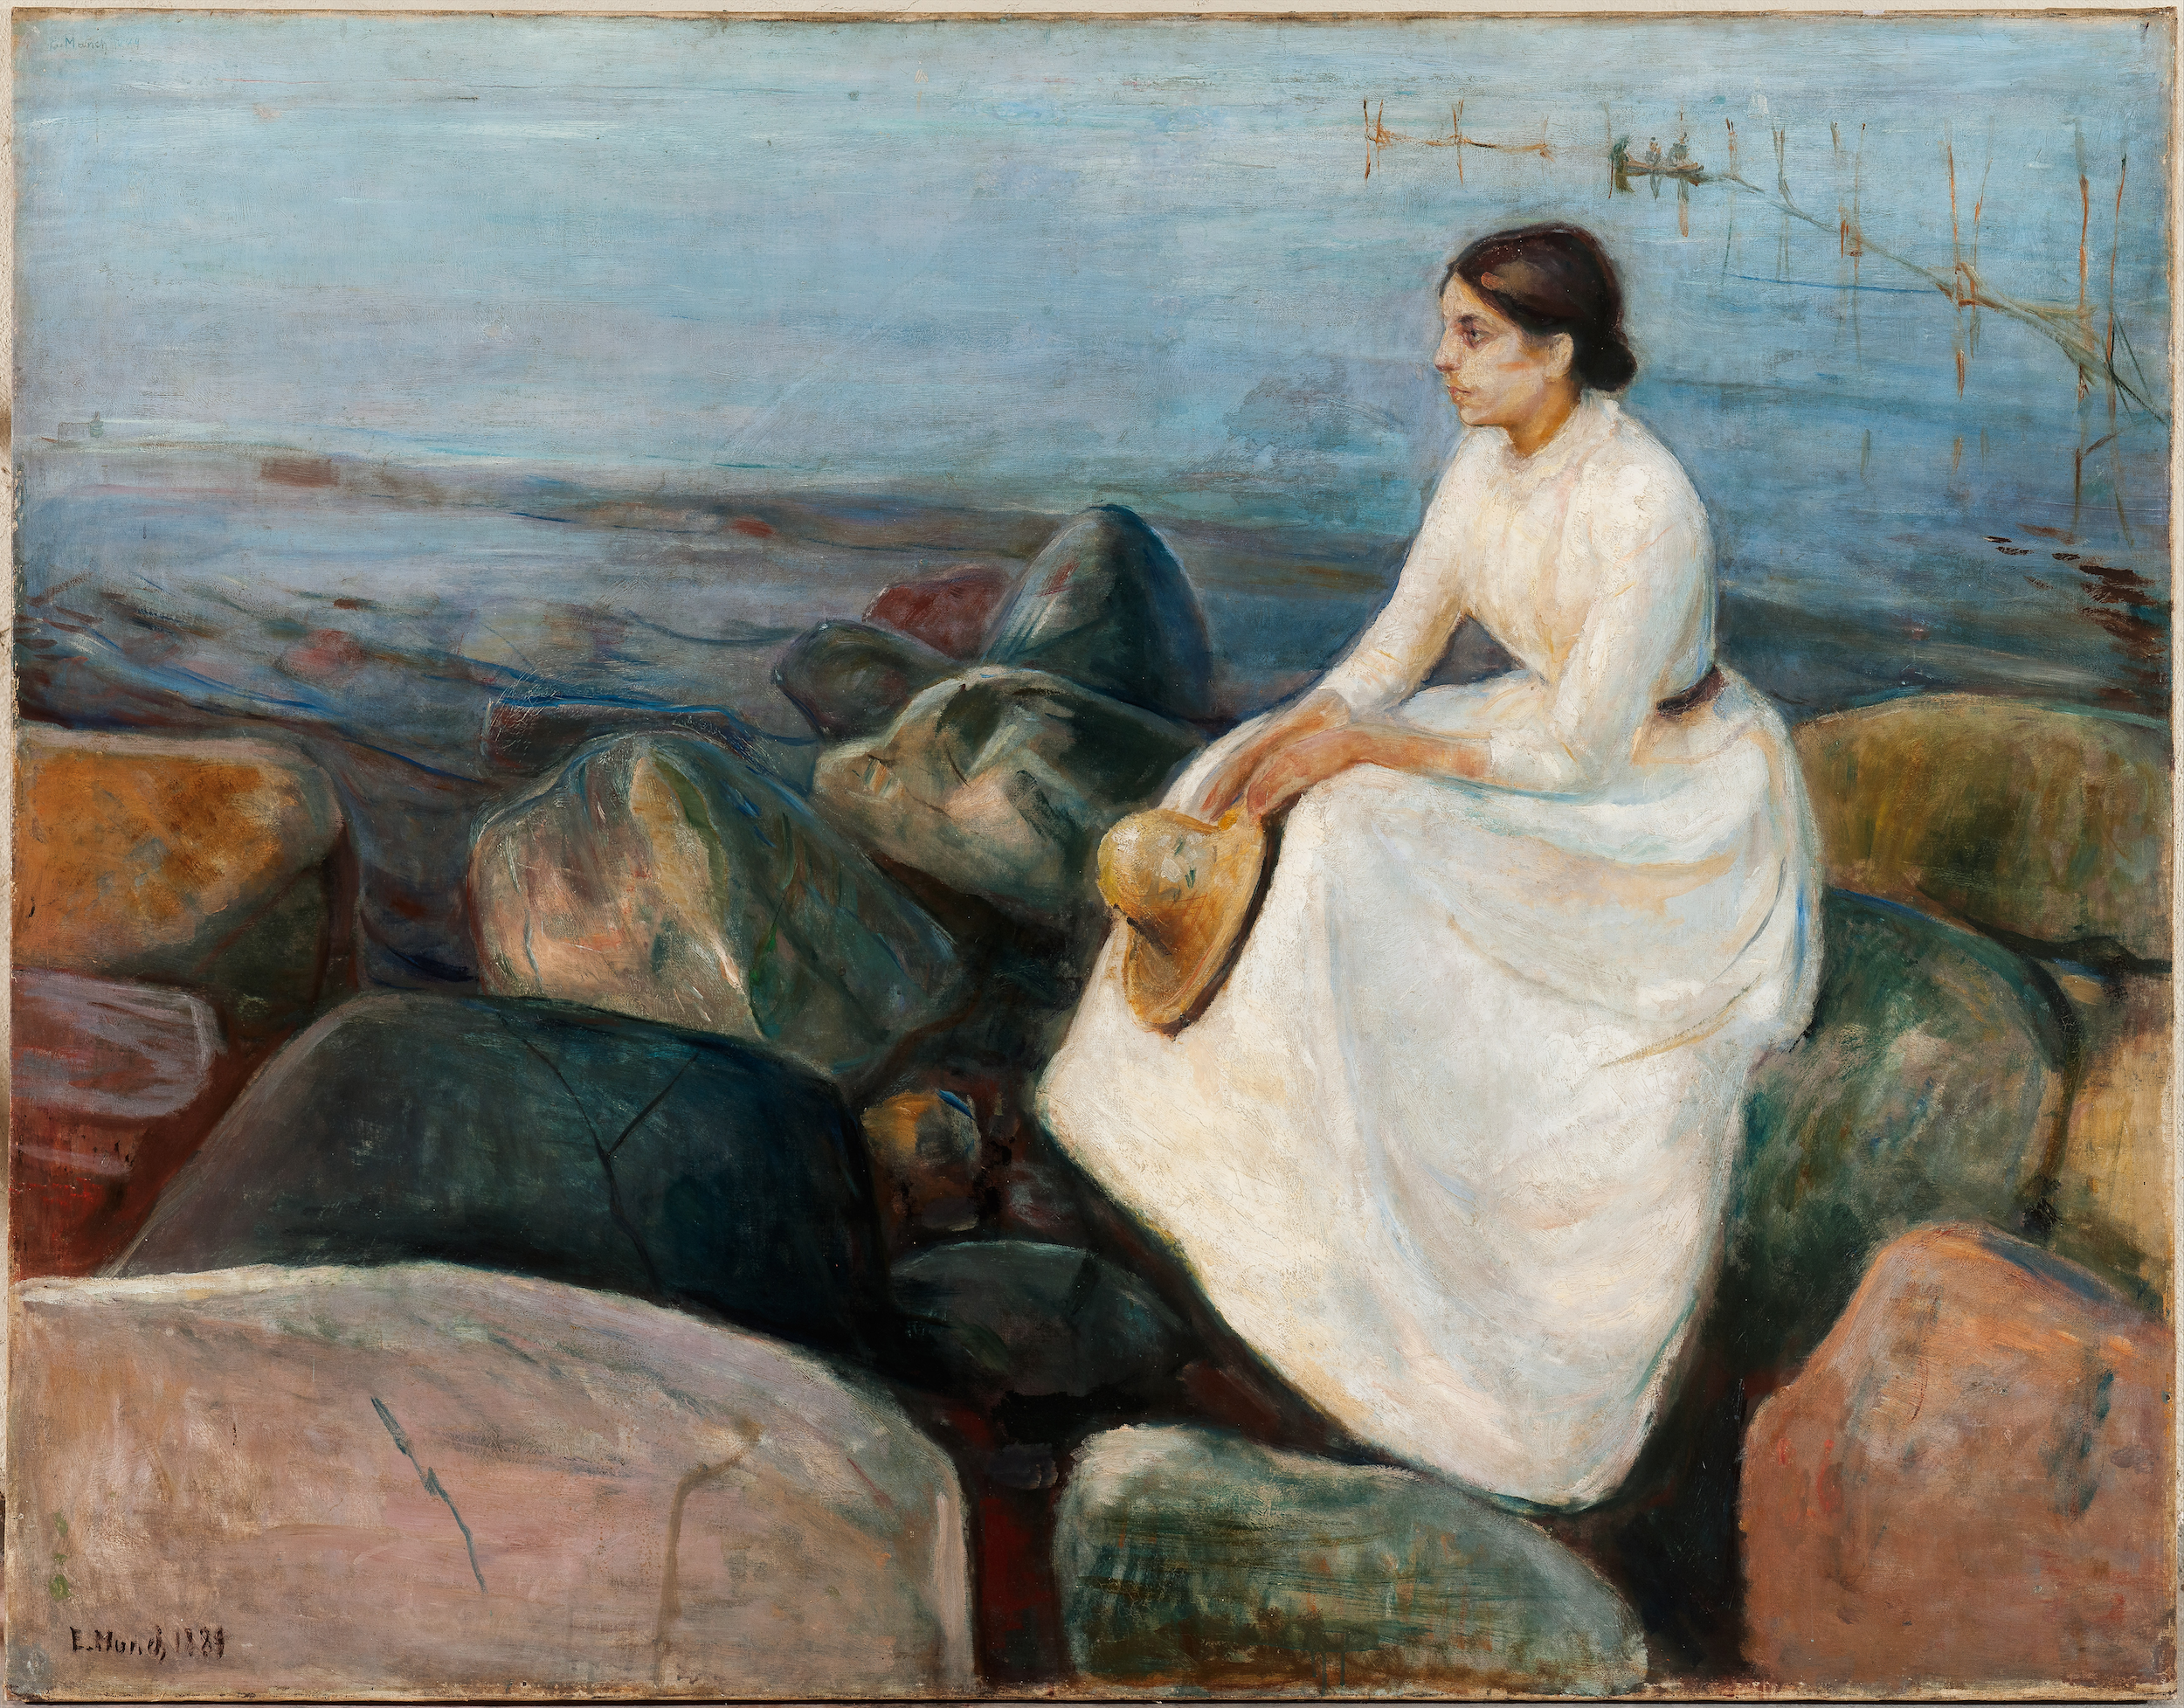 Notte d'estate, Inger in spiaggia by Edvard Munch - 1889 - 126,5 x 161,5 cm Europeana